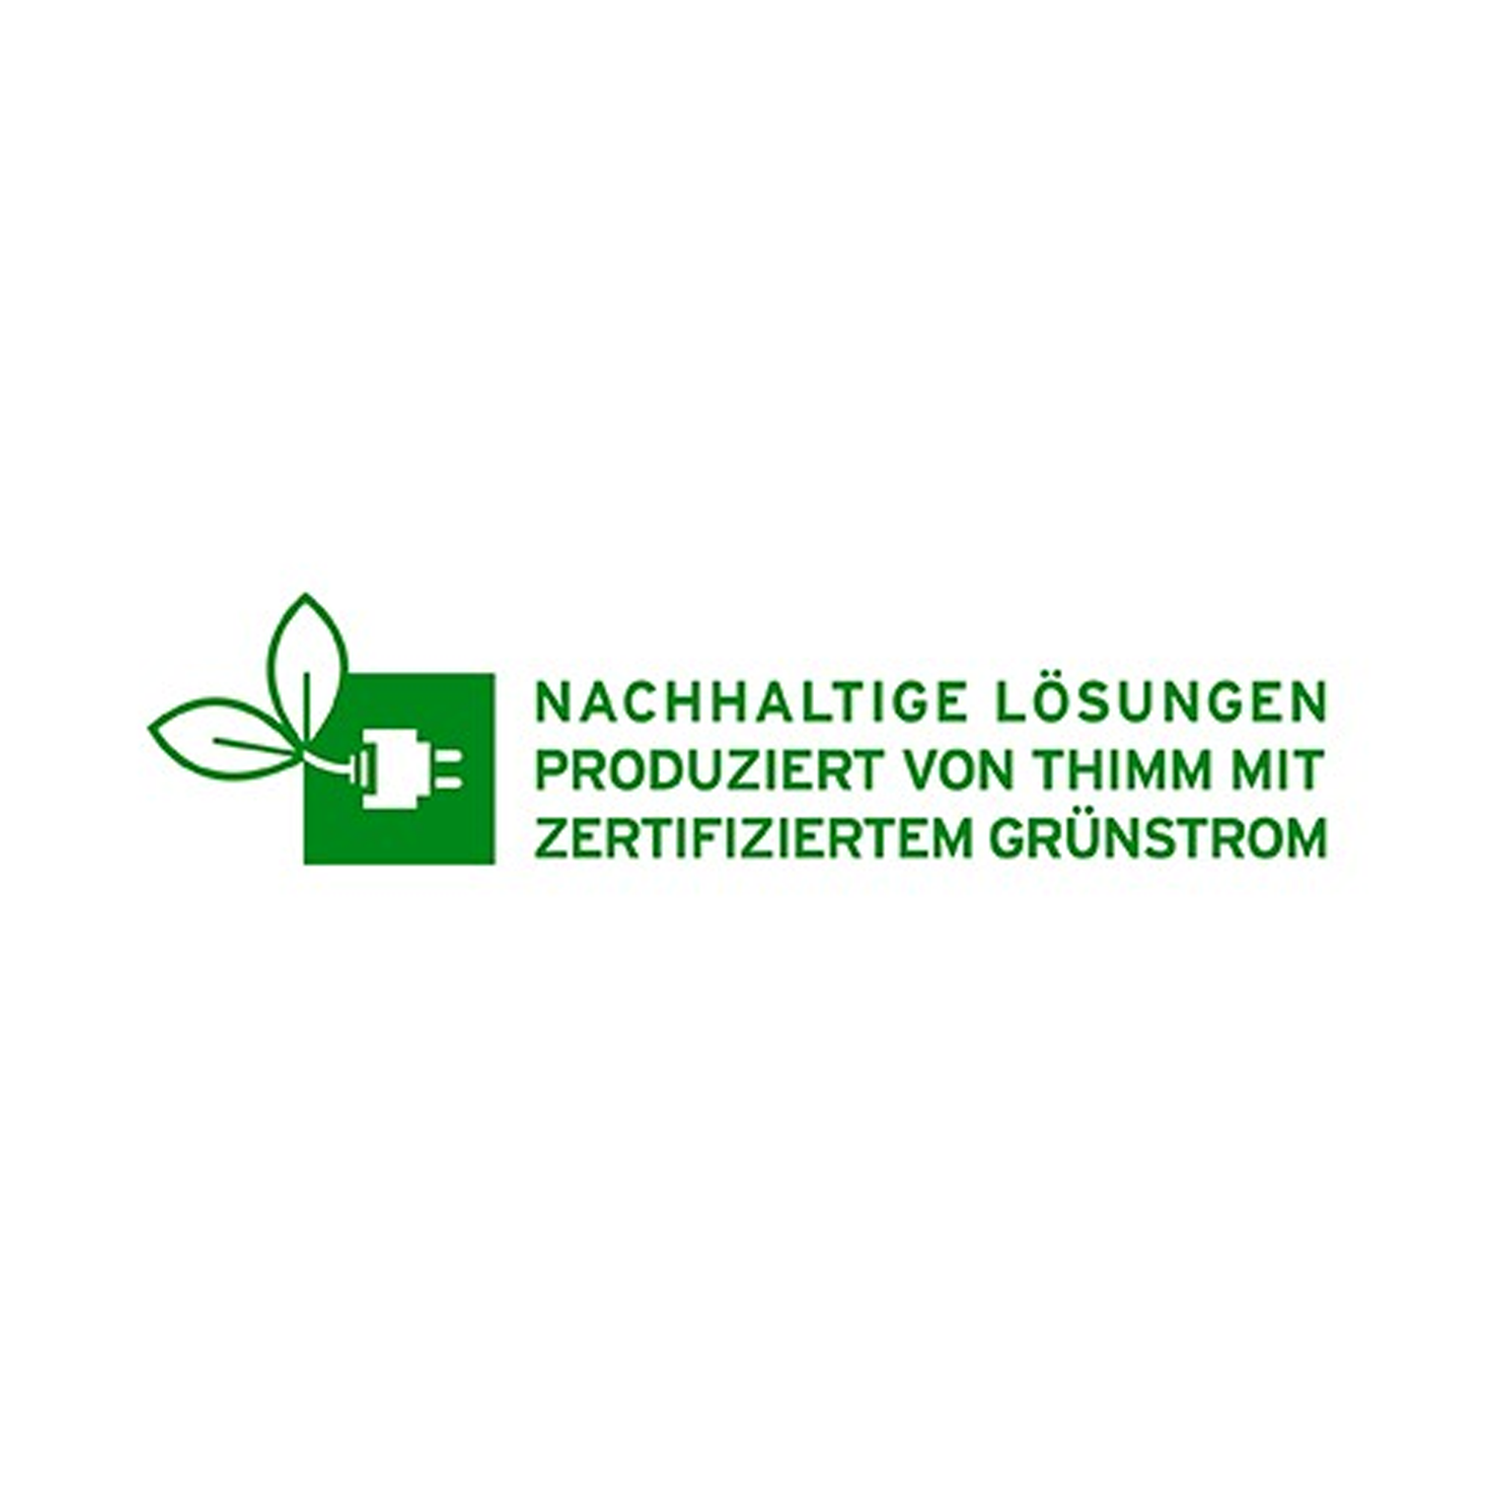 Green electricity logo